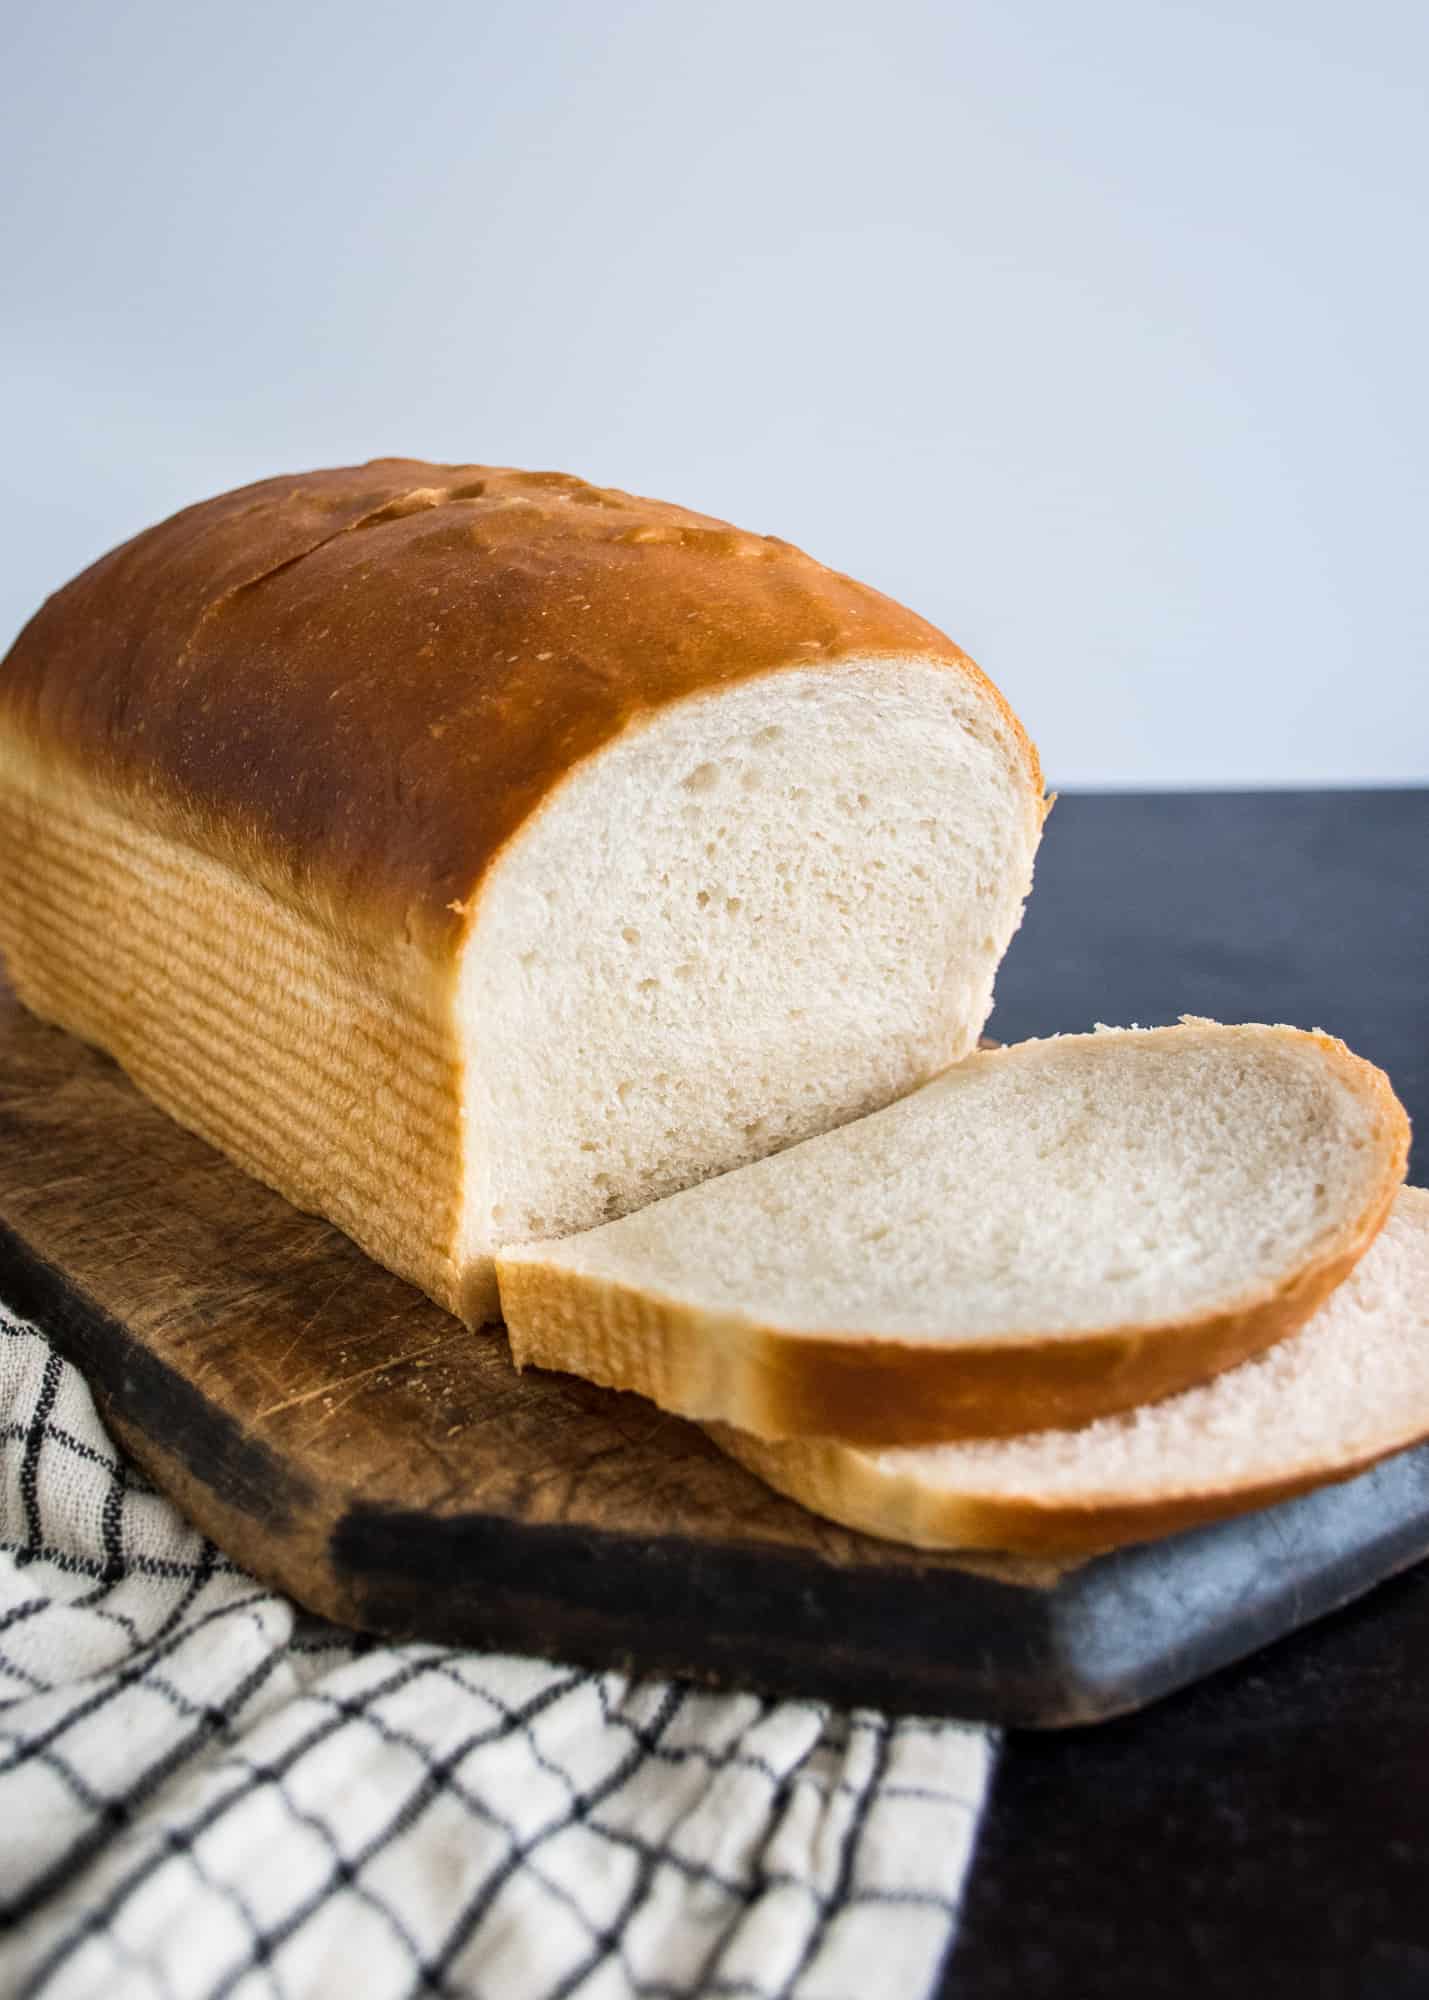 https://kitchenjoyblog.com/wp-content/uploads/2020/04/soft-sourdough-sandwich-loaf-bread-kitchen-joy-0700.jpg